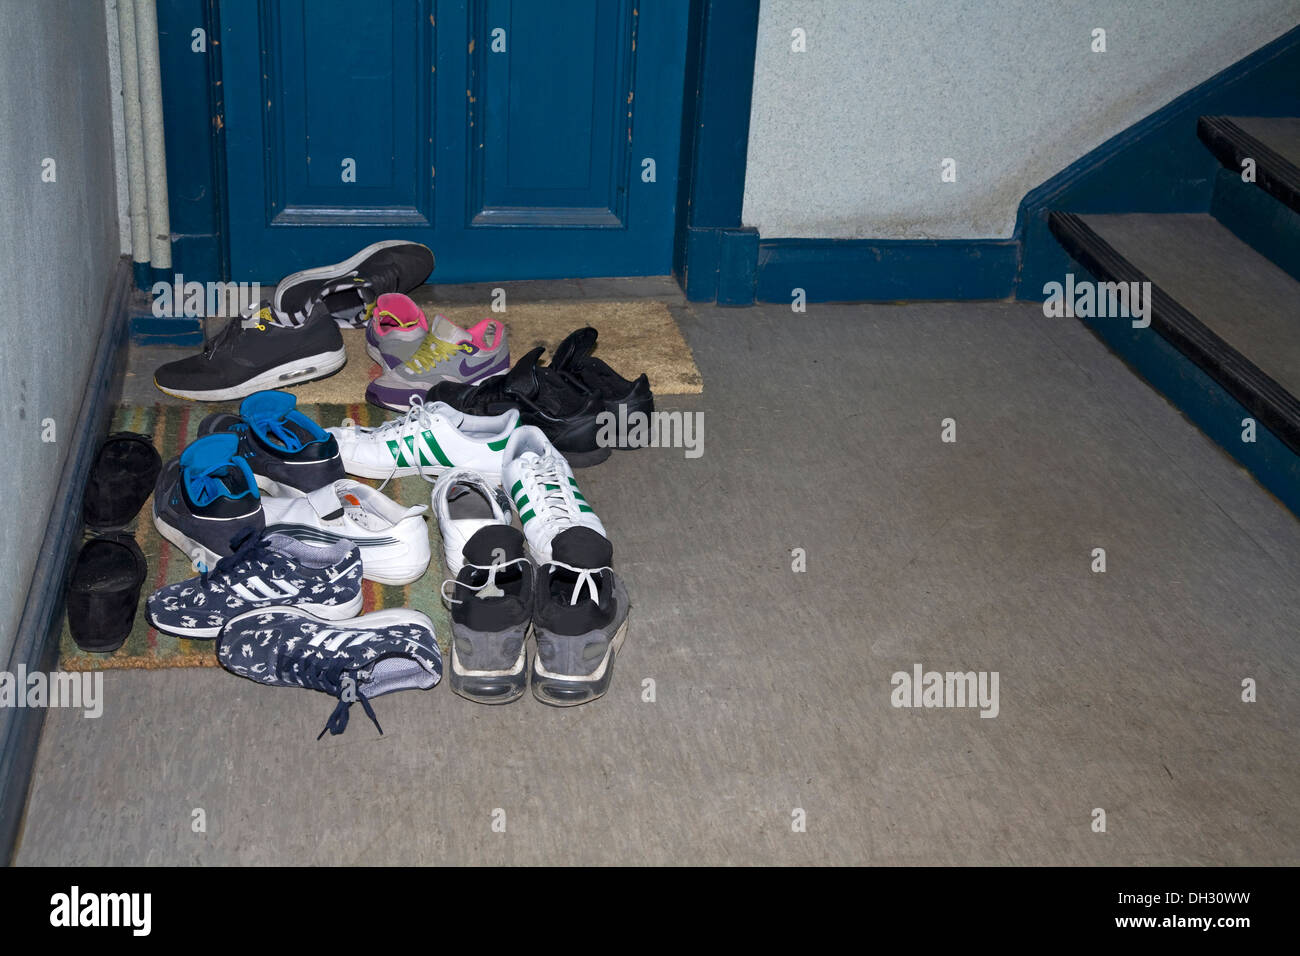 Schuhe im Treppenhaus Stockfotografie - Alamy